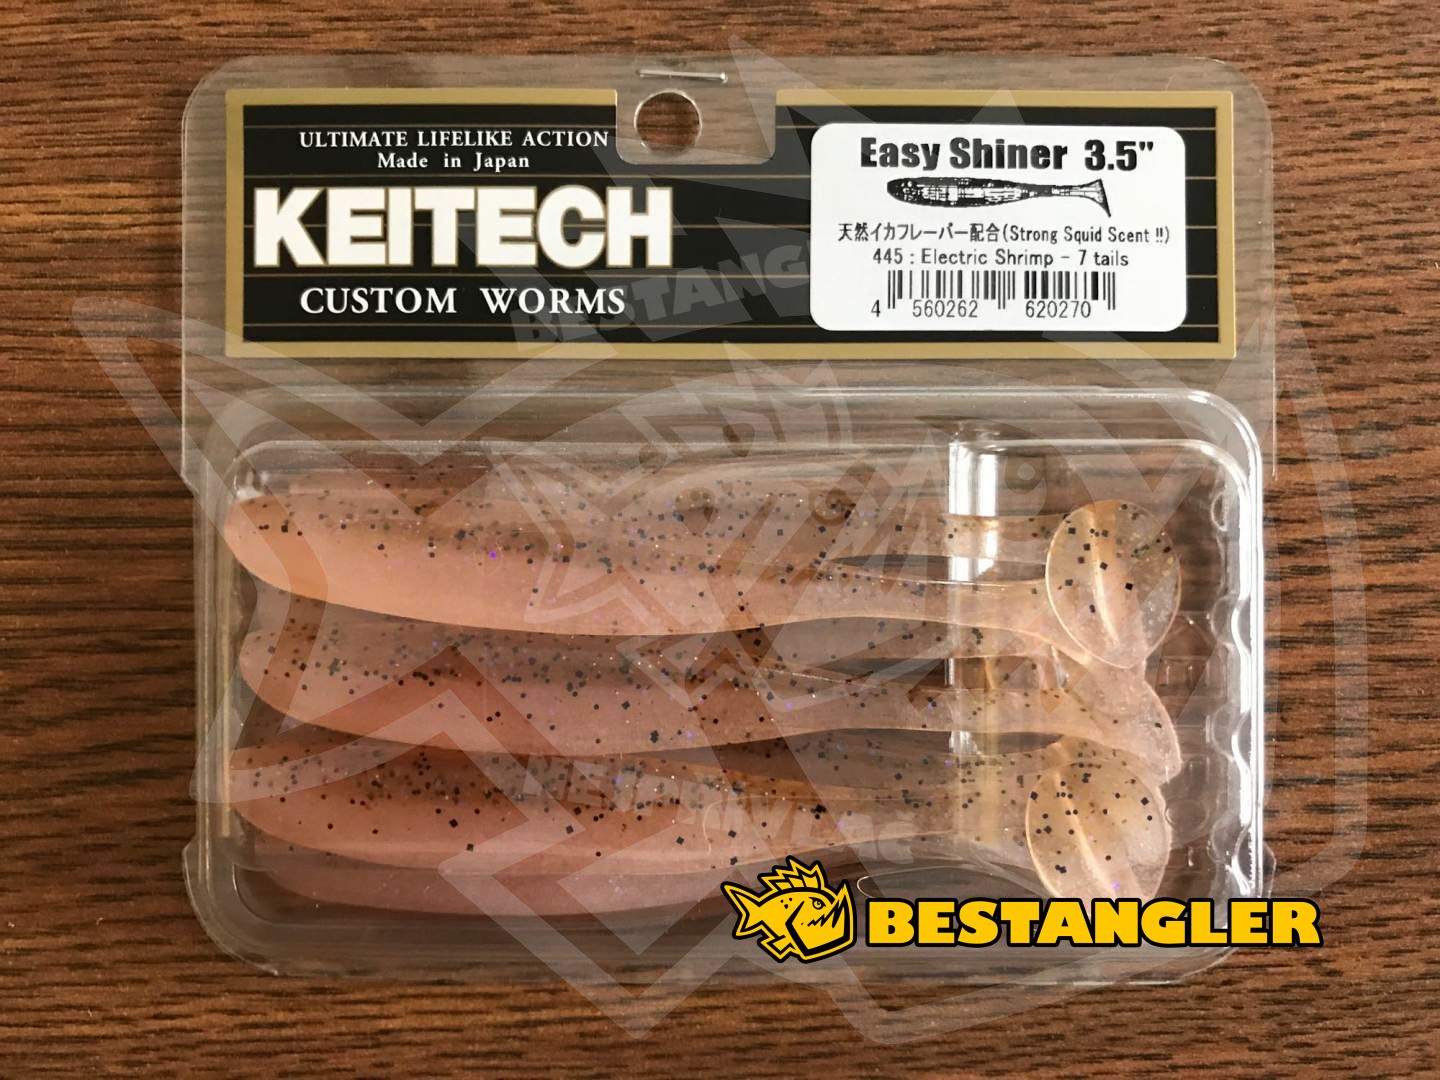 Keitech Easy Shiner 3.5 Electric Shrimp